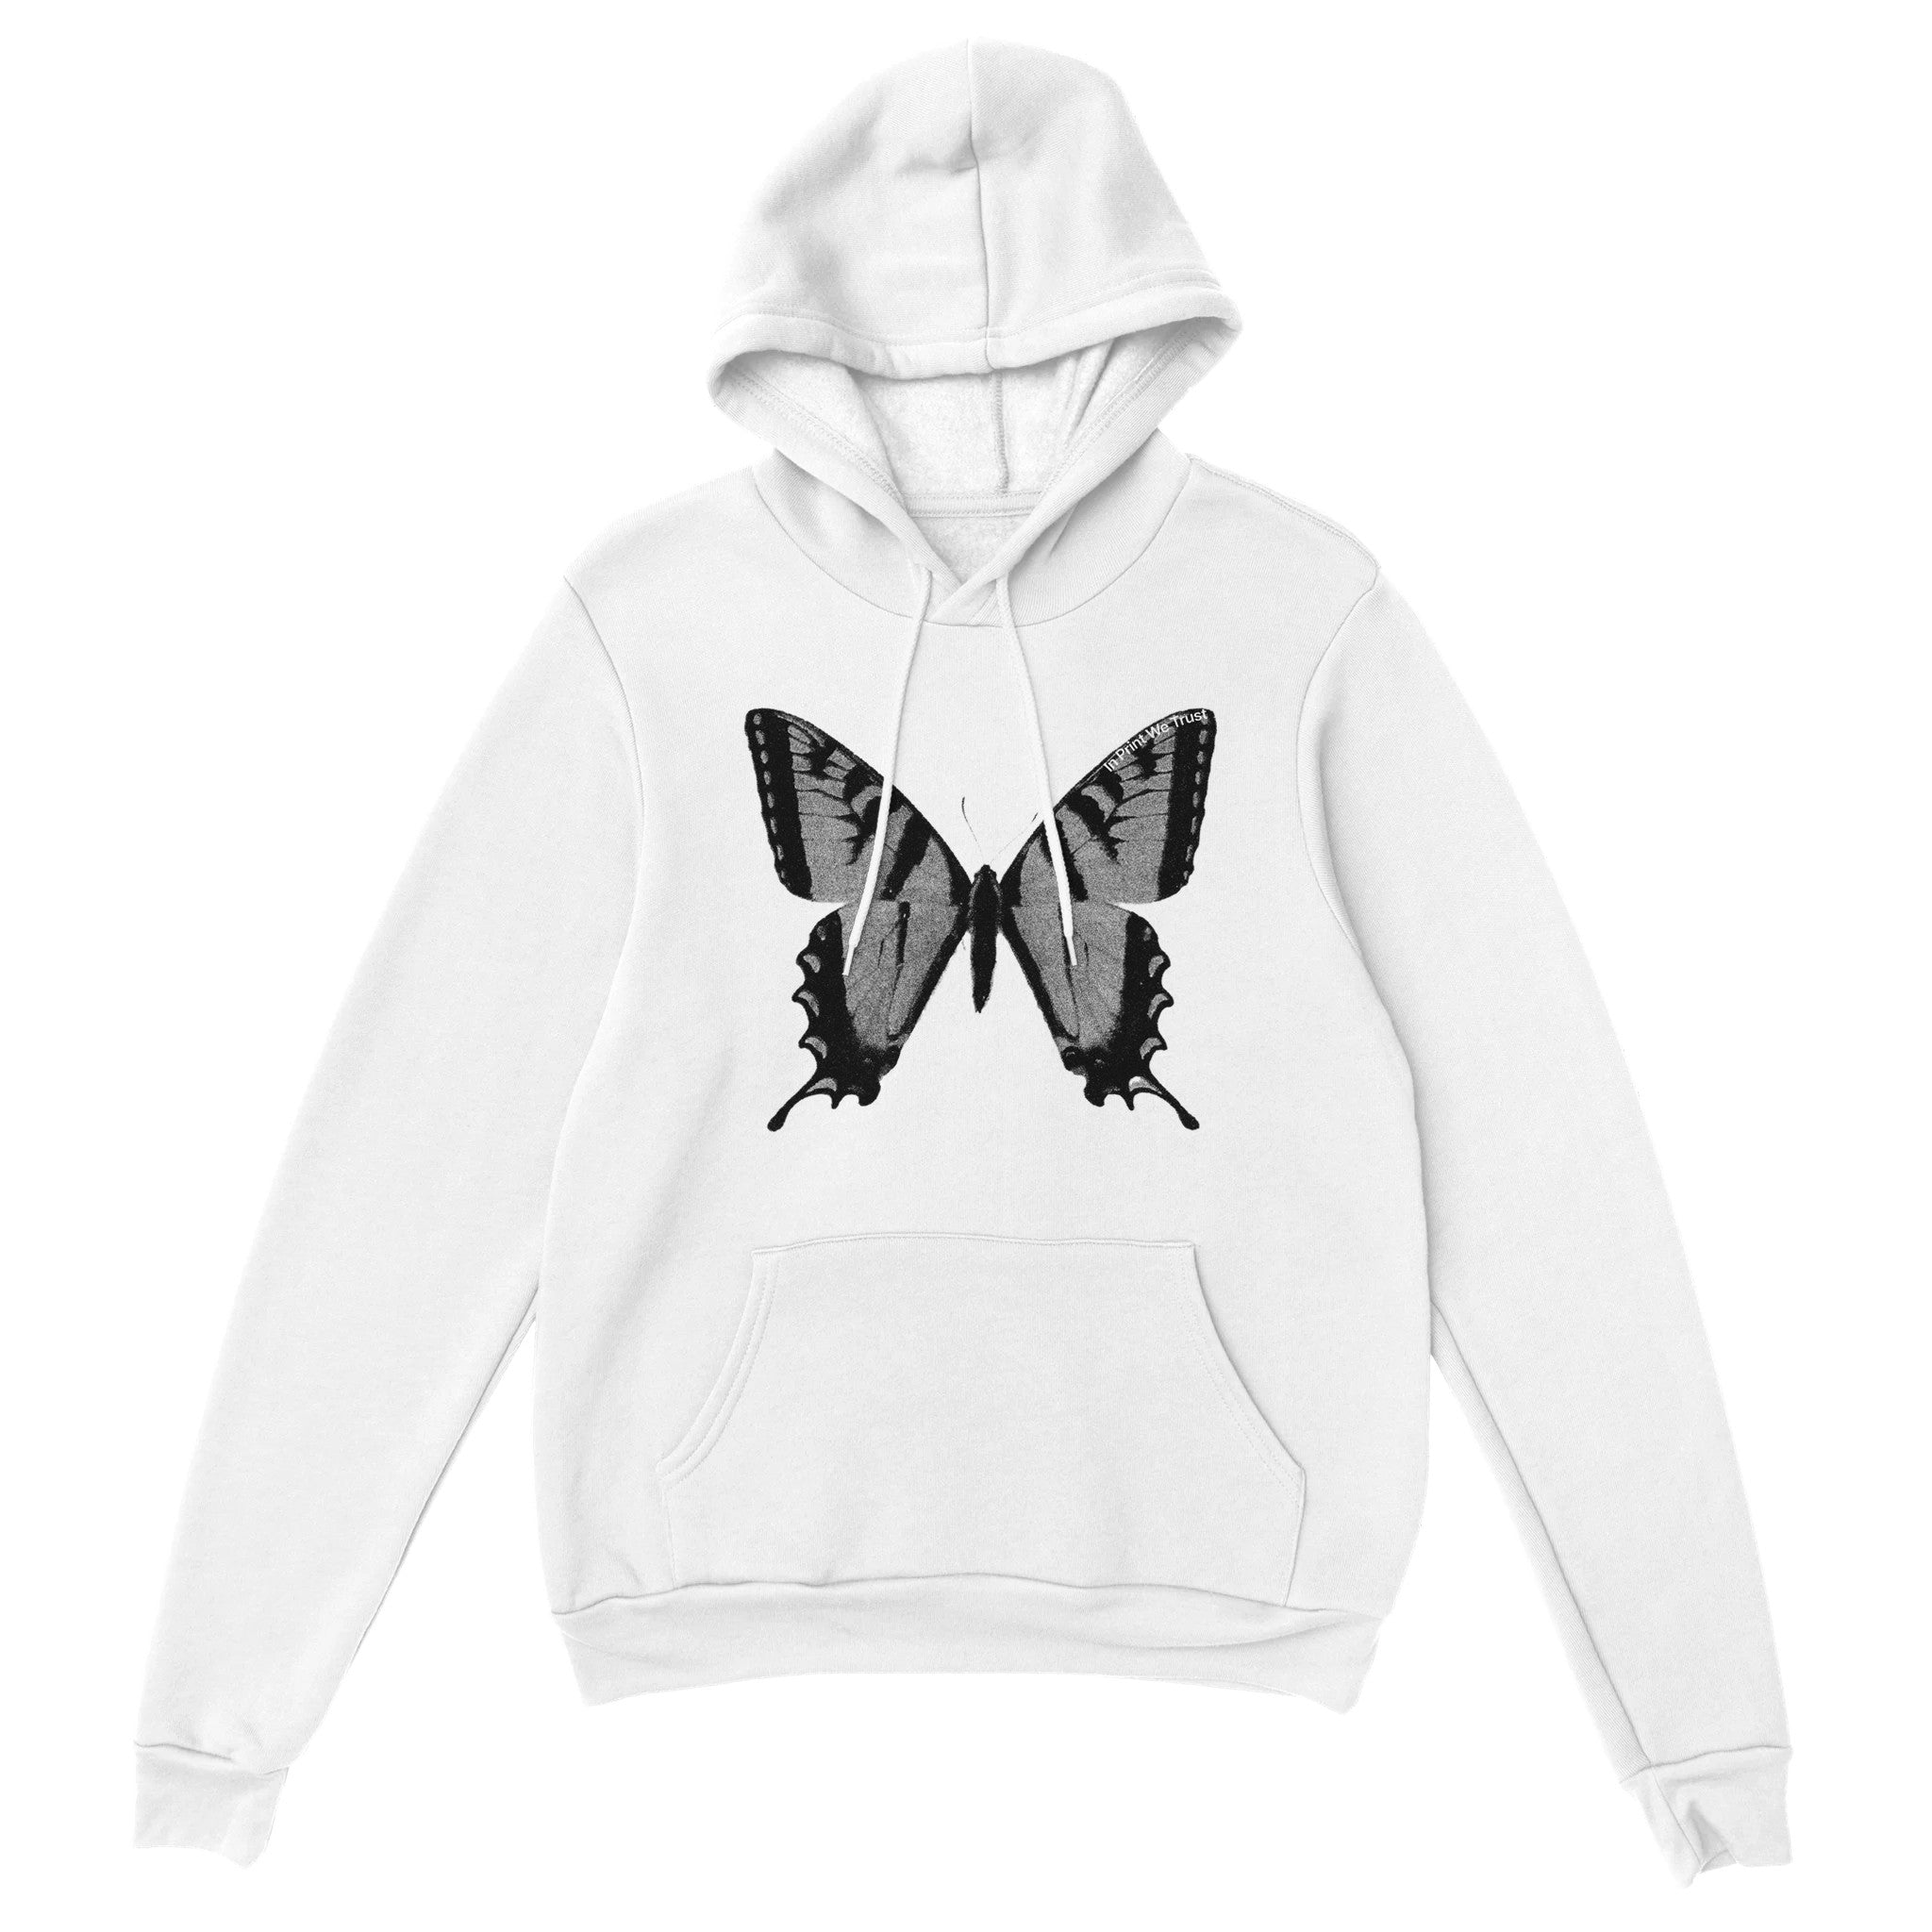 'Butterfly Effect' hoodie - In Print We Trust